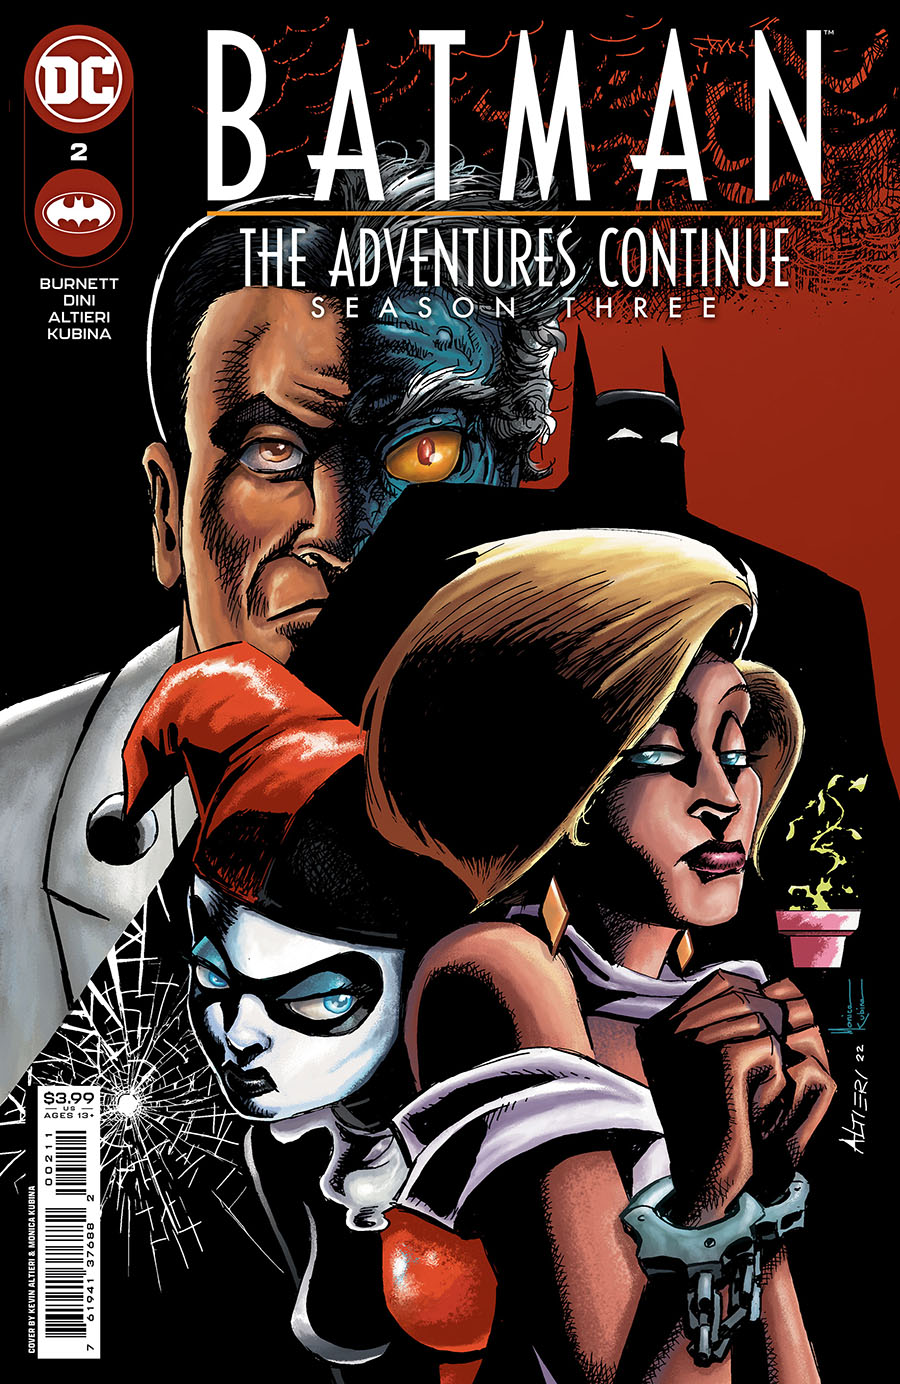 Batman The Adventures Continue Season III #2 Cover A Regular Kevin Altieri Cover